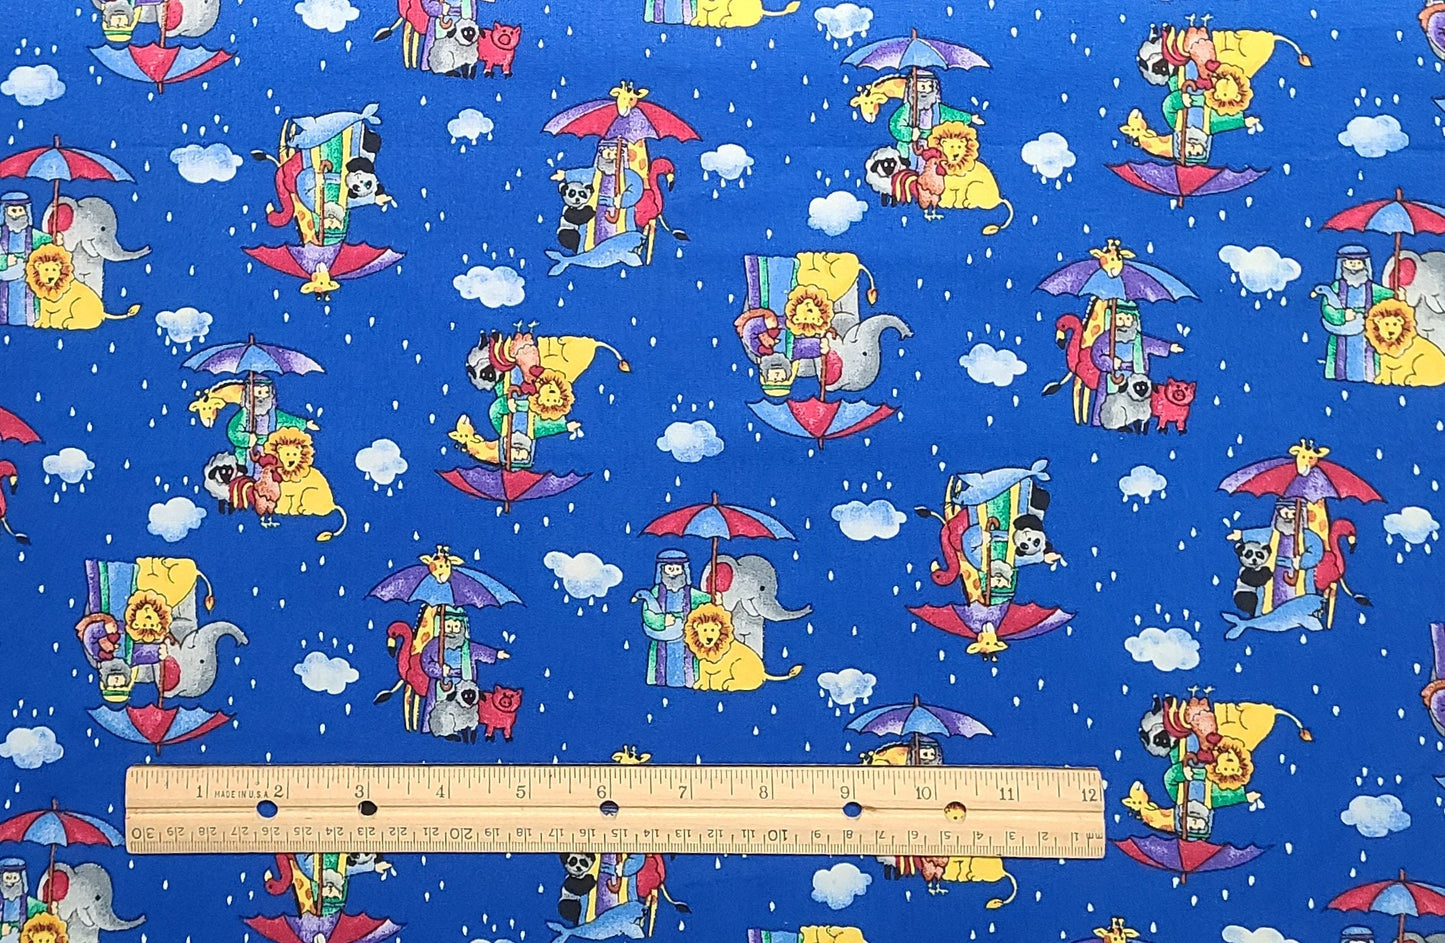 EOB - Fabric Traditions 1997 - Medium Blue Fabric / Primary Colored Cartoon-Style (Juvenile) Noah's Ark Print